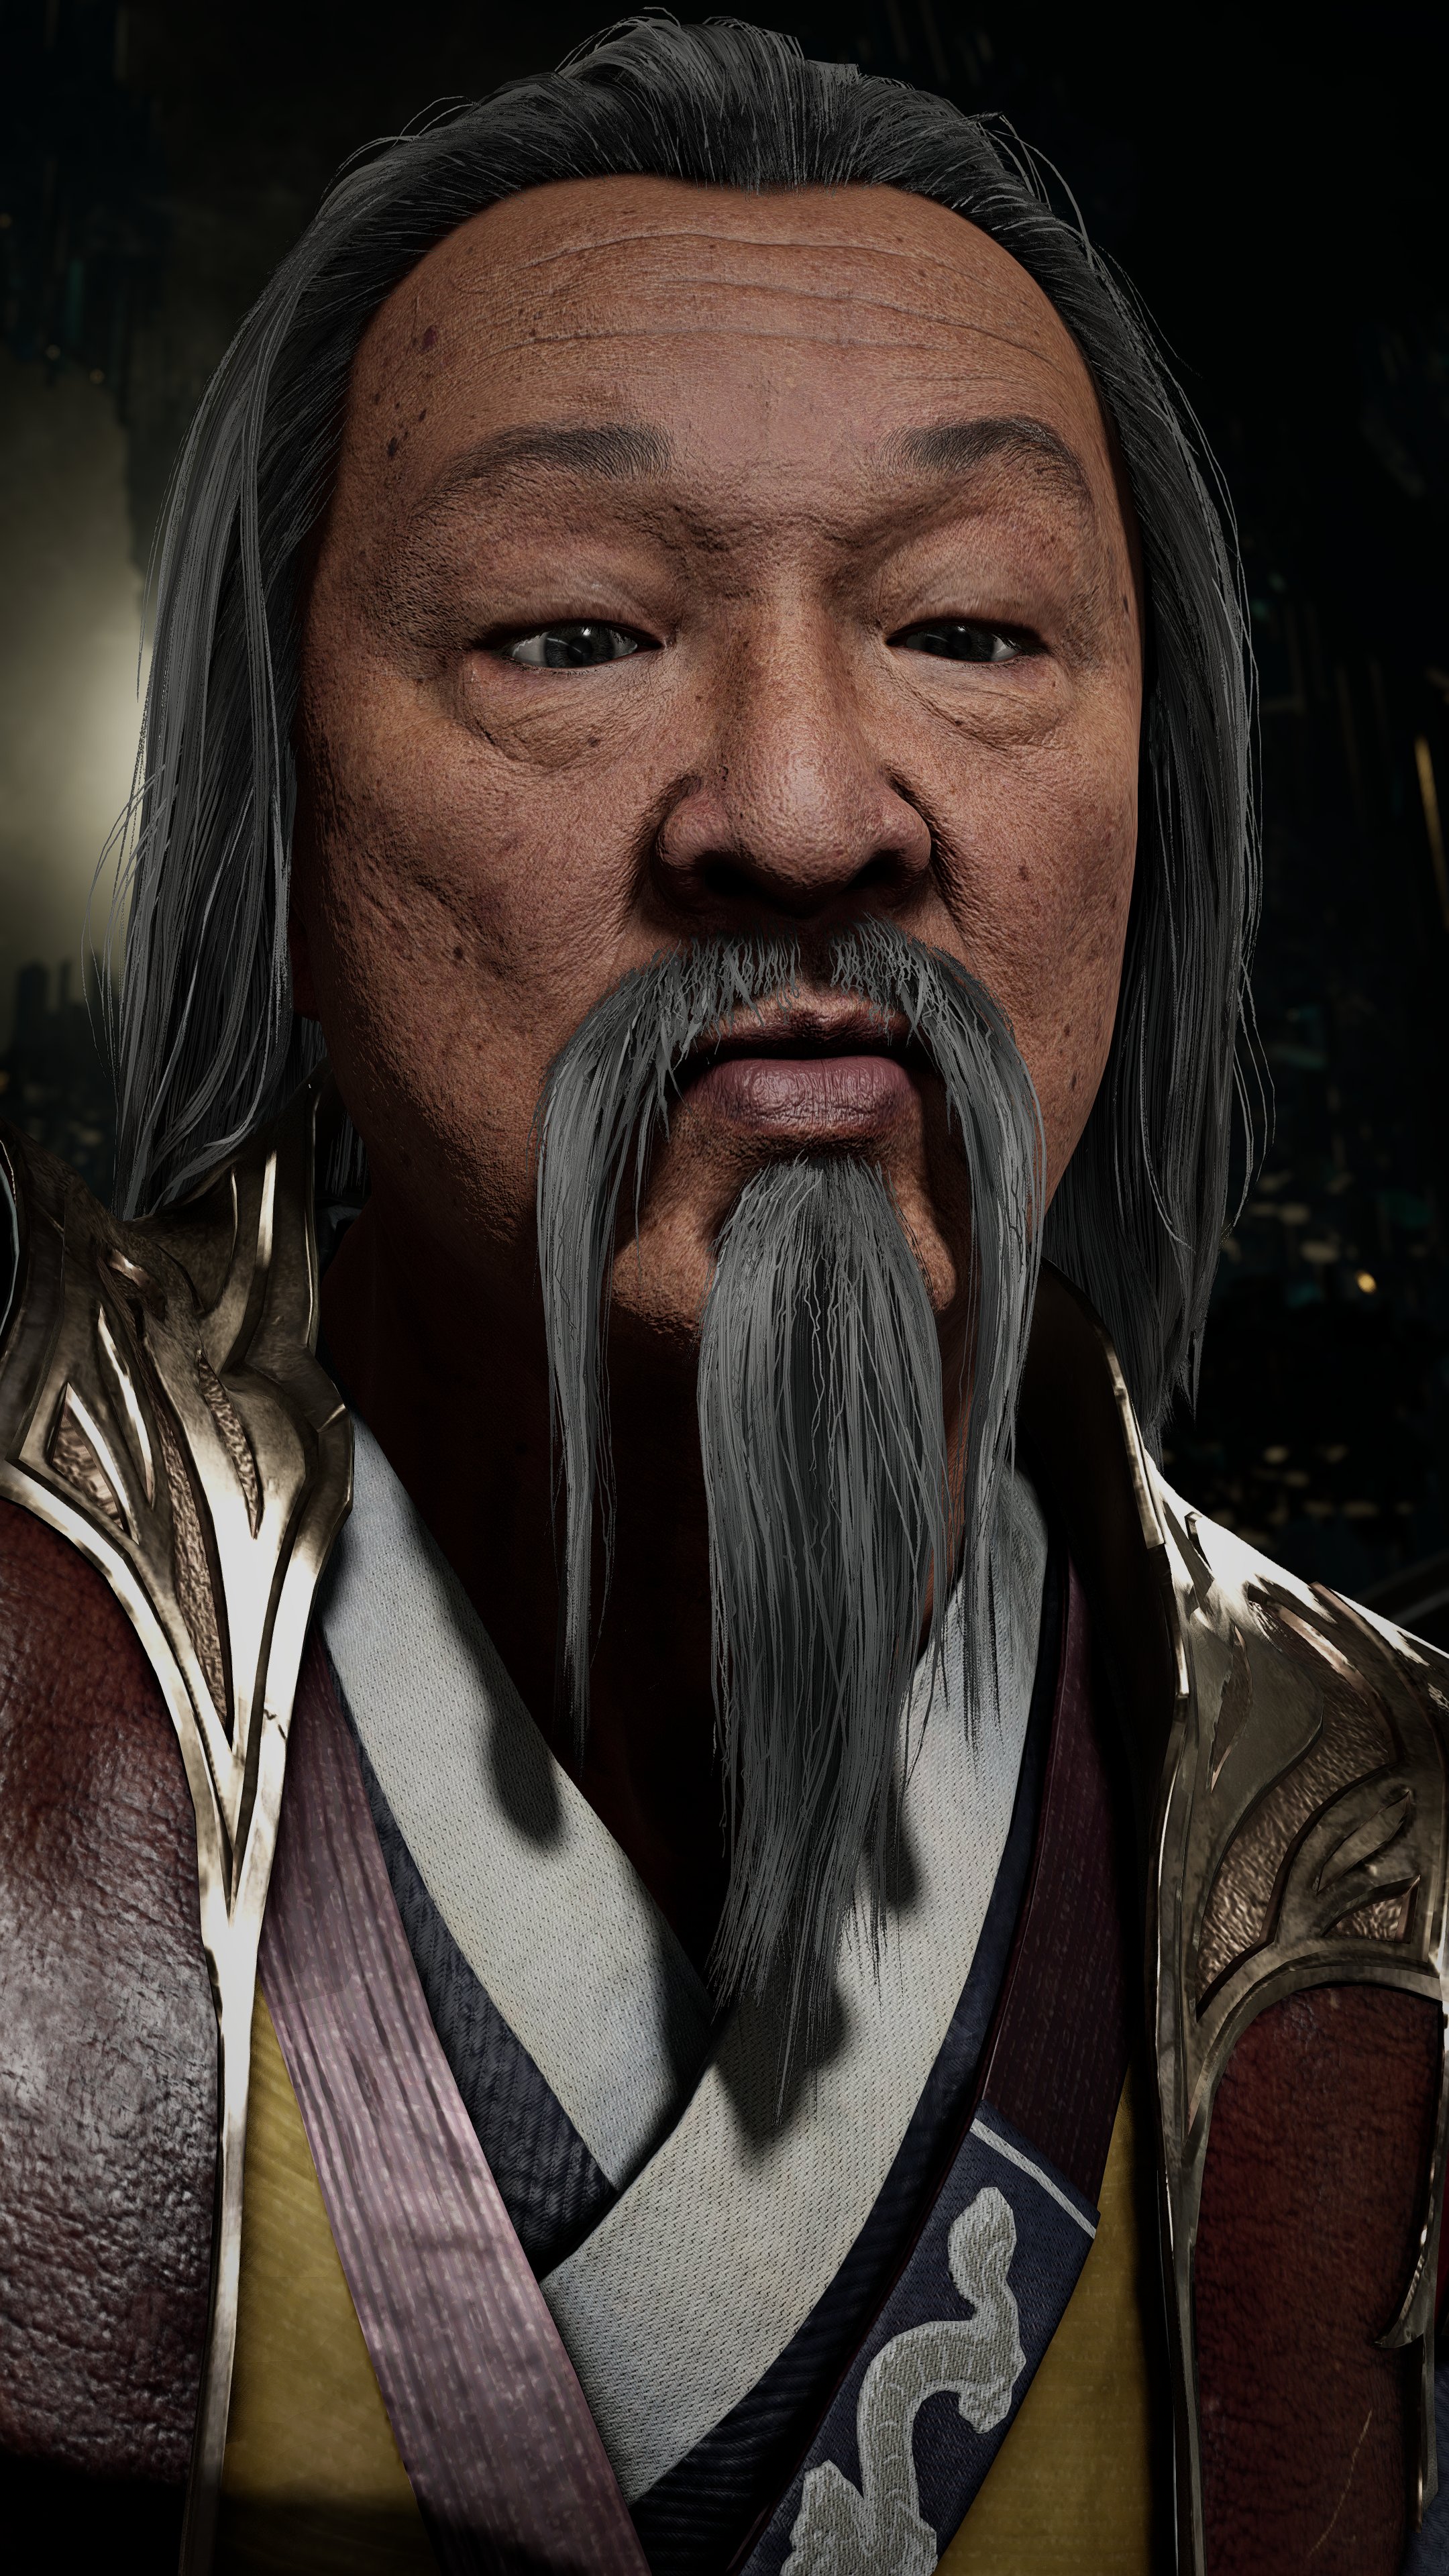 TQT on X: Shang Tsung - For Eternity @CHTOfficial 😊 #Mortalkombat #MK11  #MKPhotomode  / X